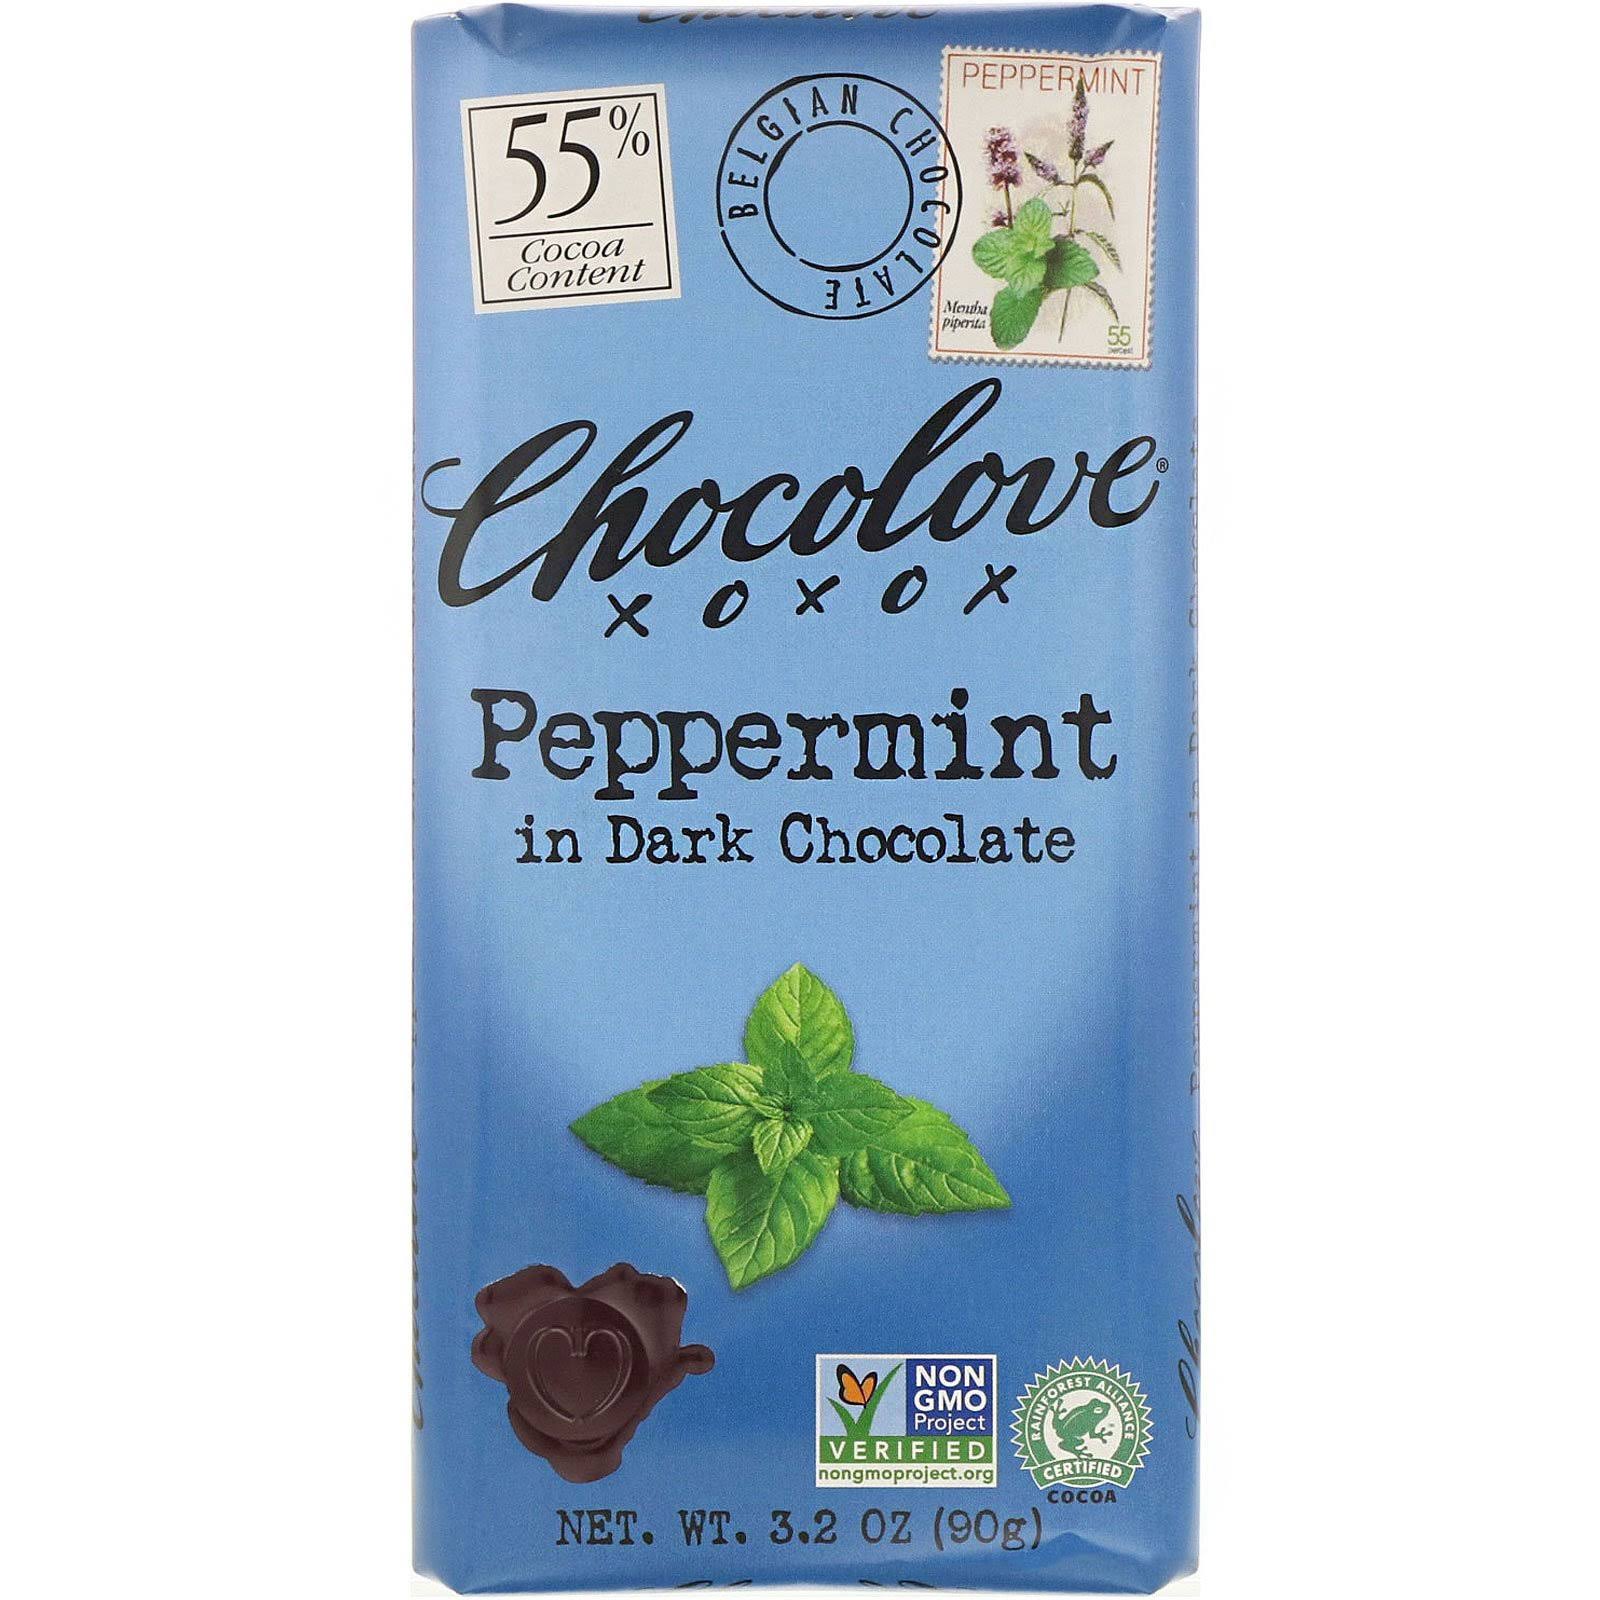 Chocolove Peppermint In Dark Chocolate - 12 x 3.2oz